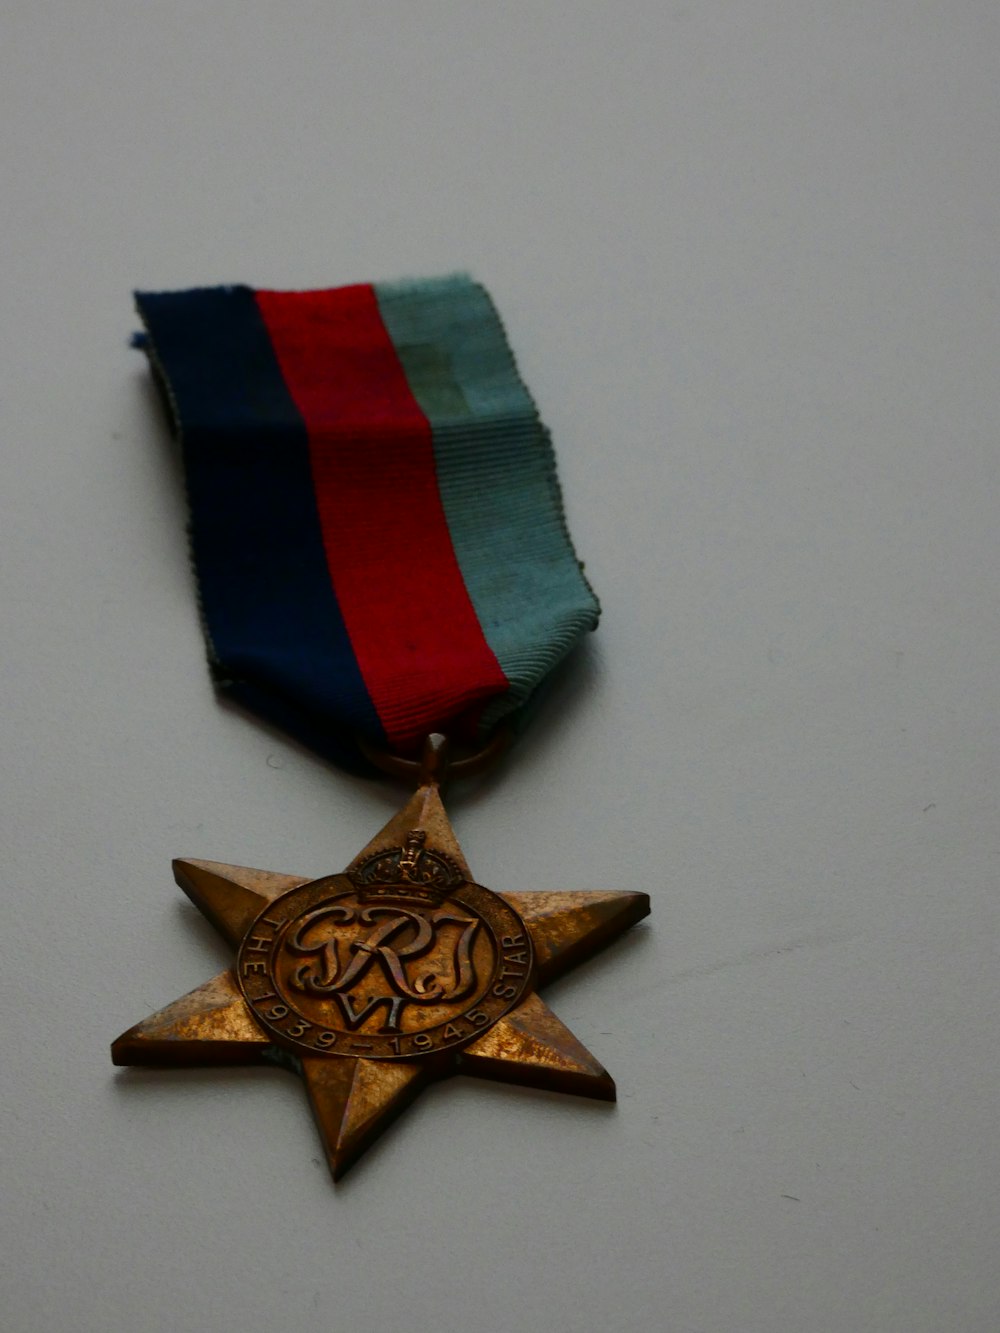 a medal with a flag